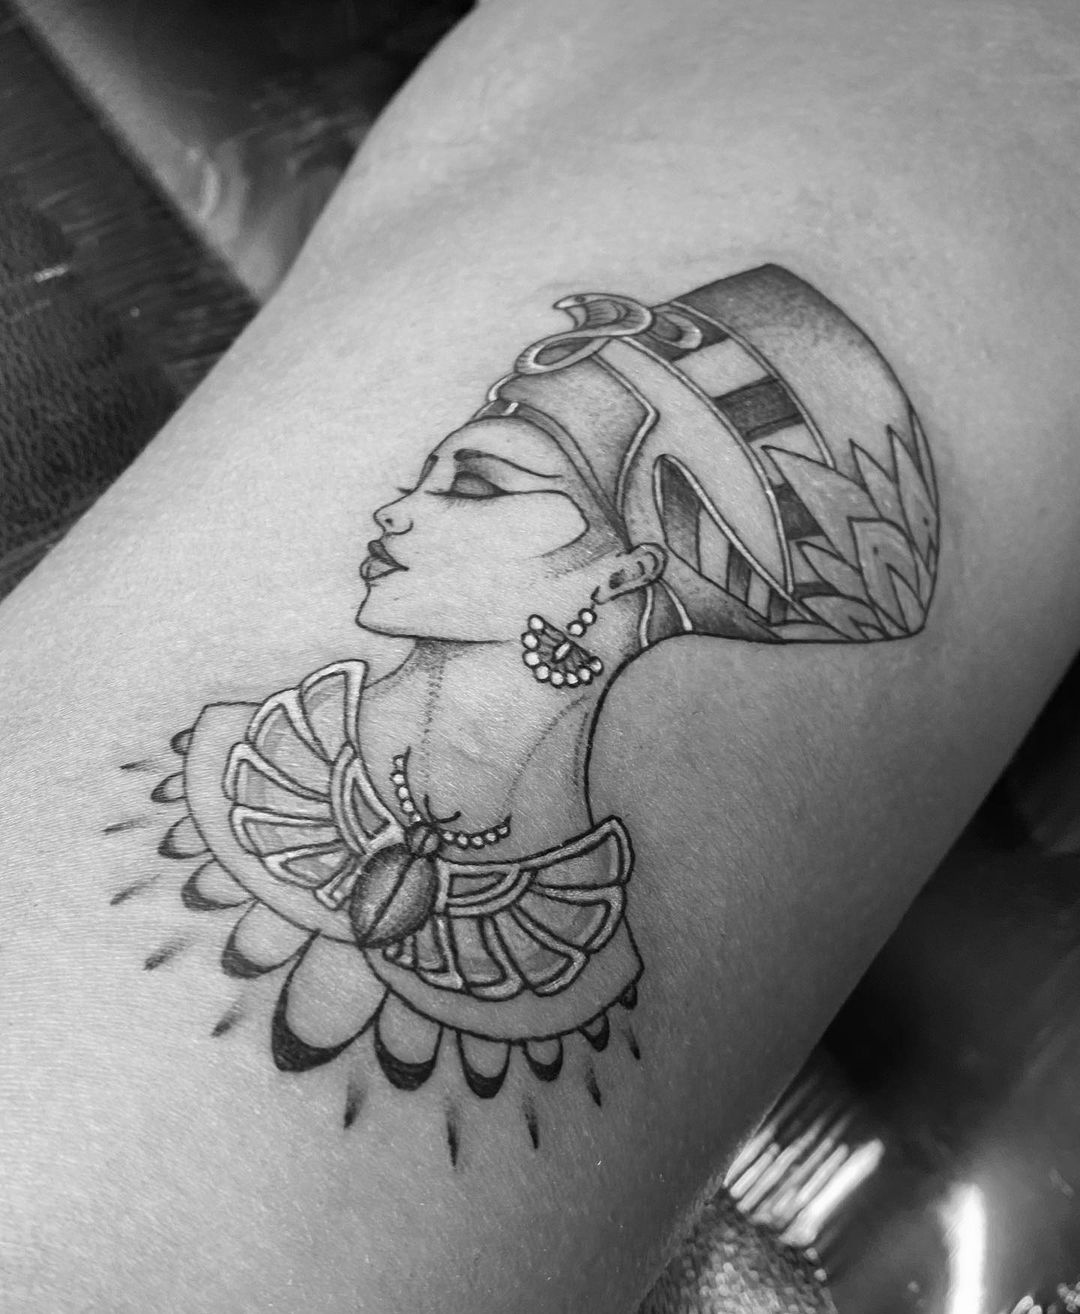 Single needle Nefertiti tattoo located on the inner